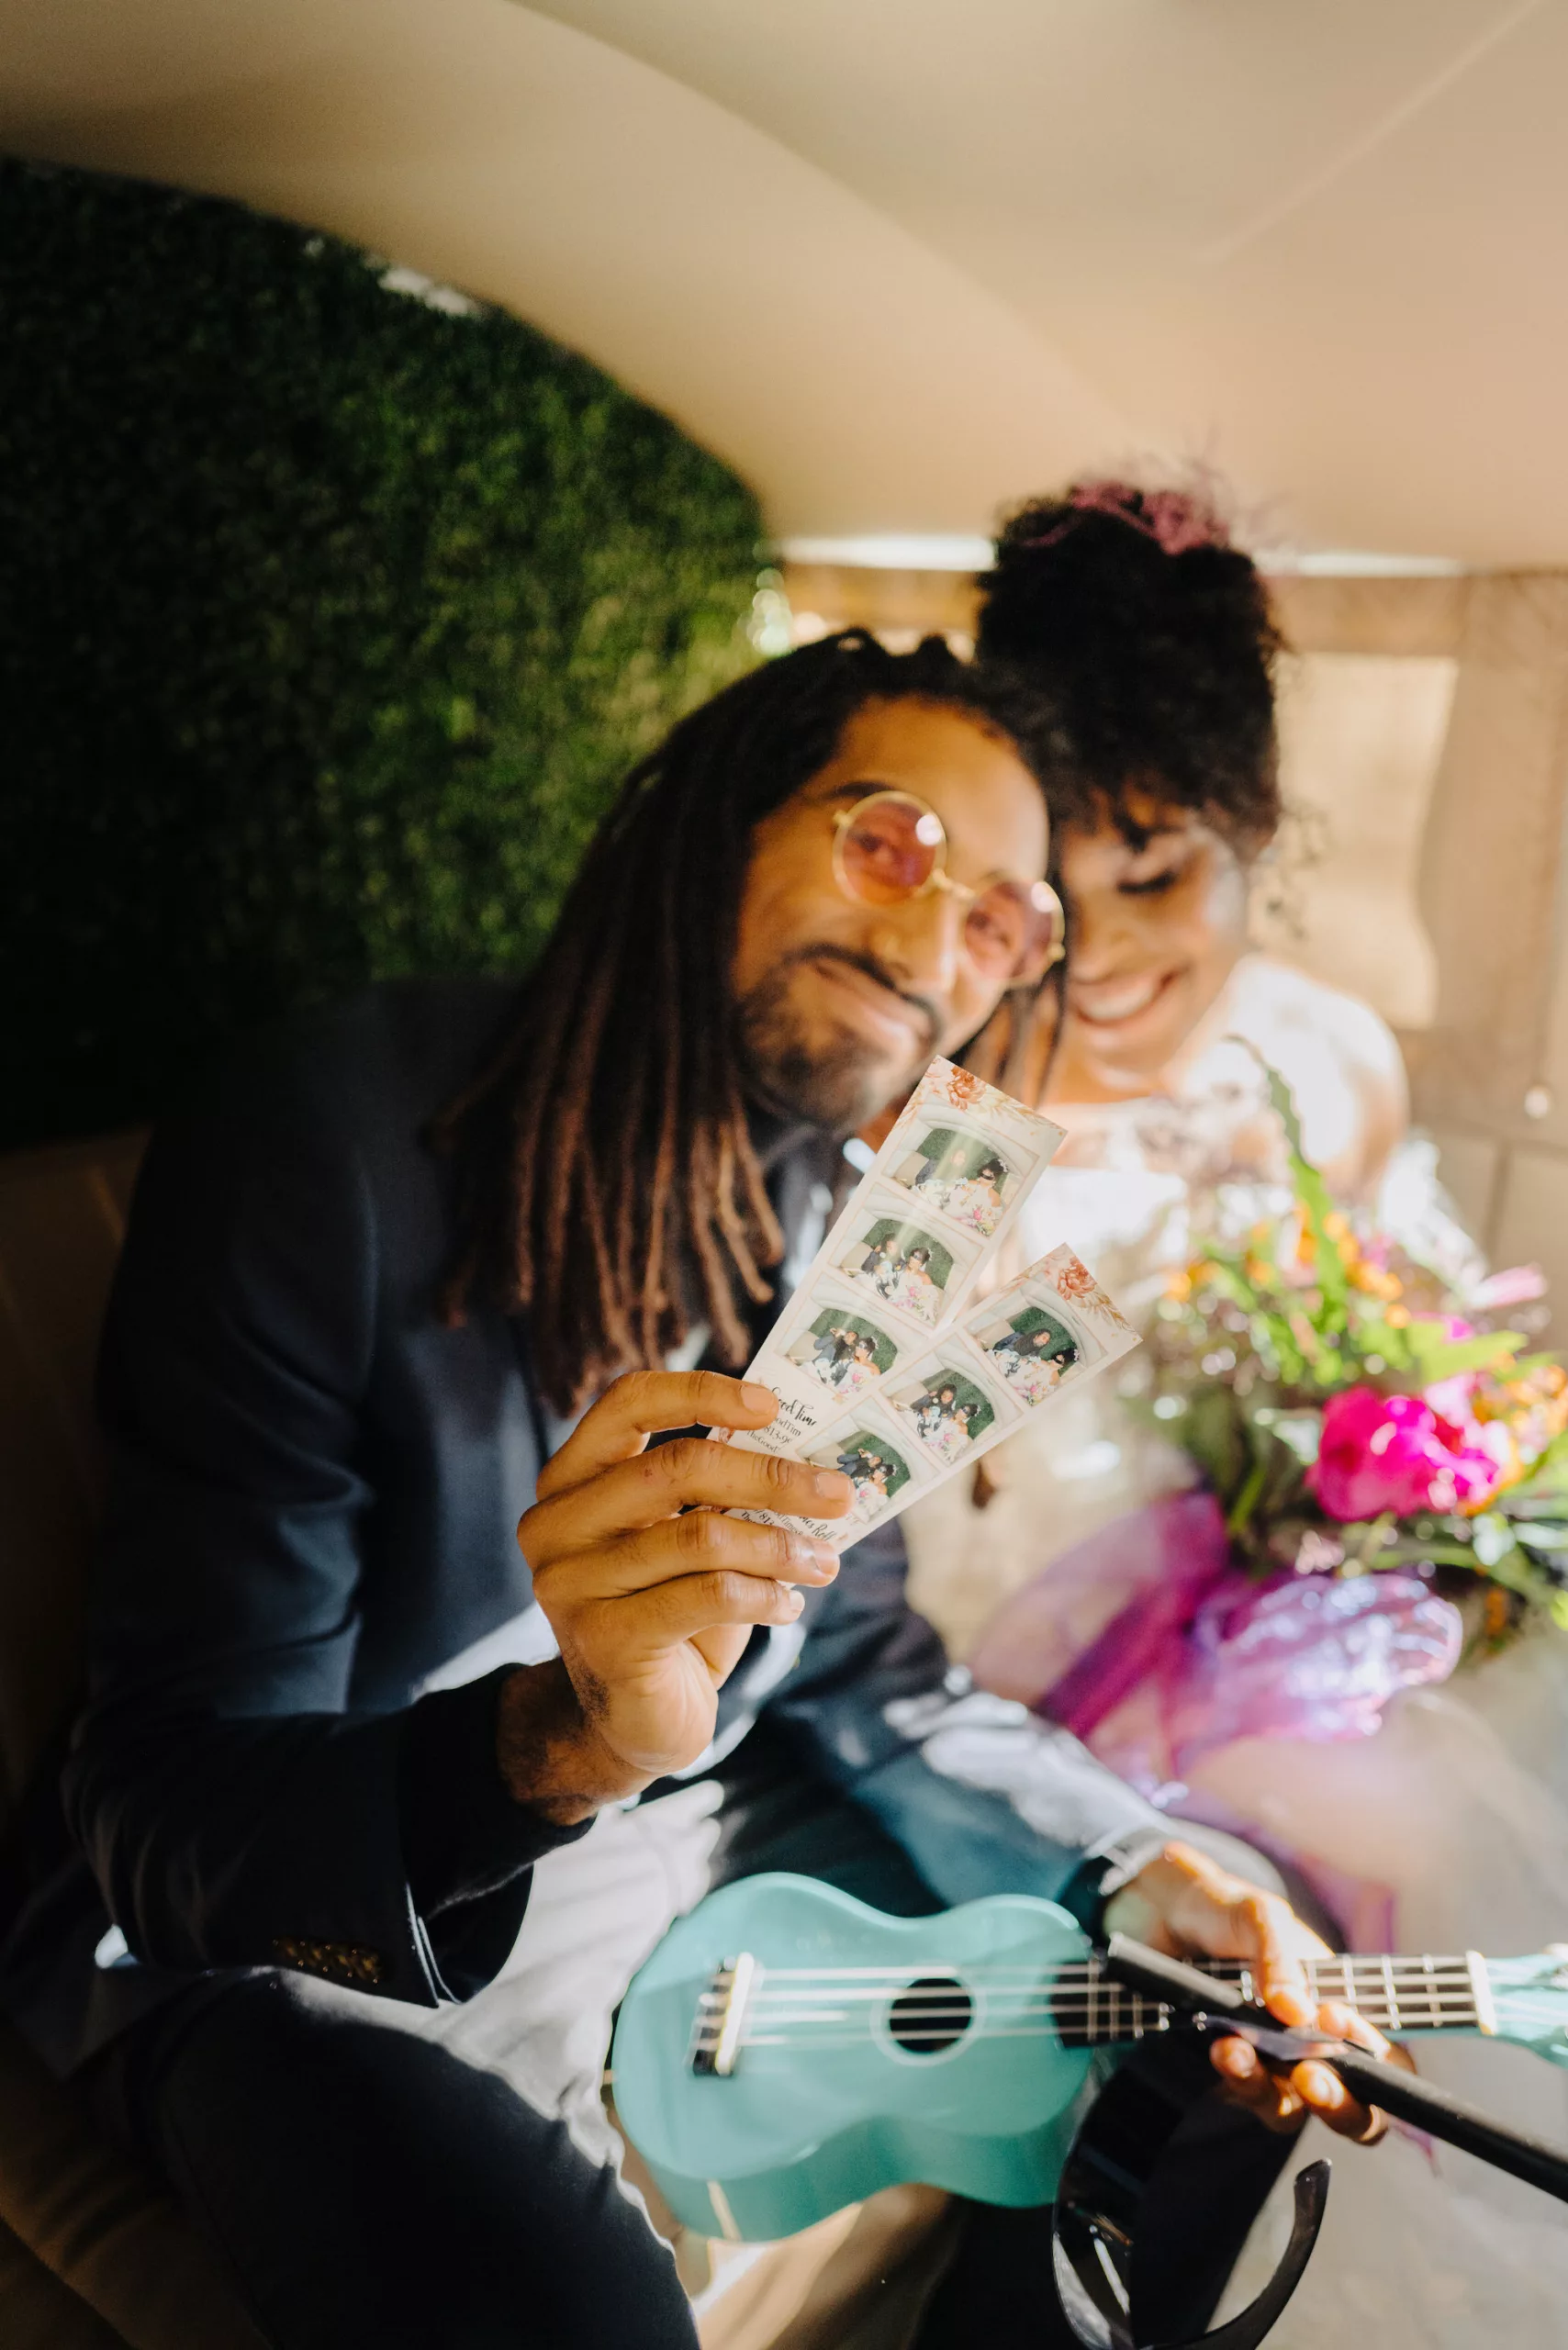 Bride and Groom Volkswagen Bus Photo Op Wedding Portrait | Tampa Bay Content Creator Behind The Vows